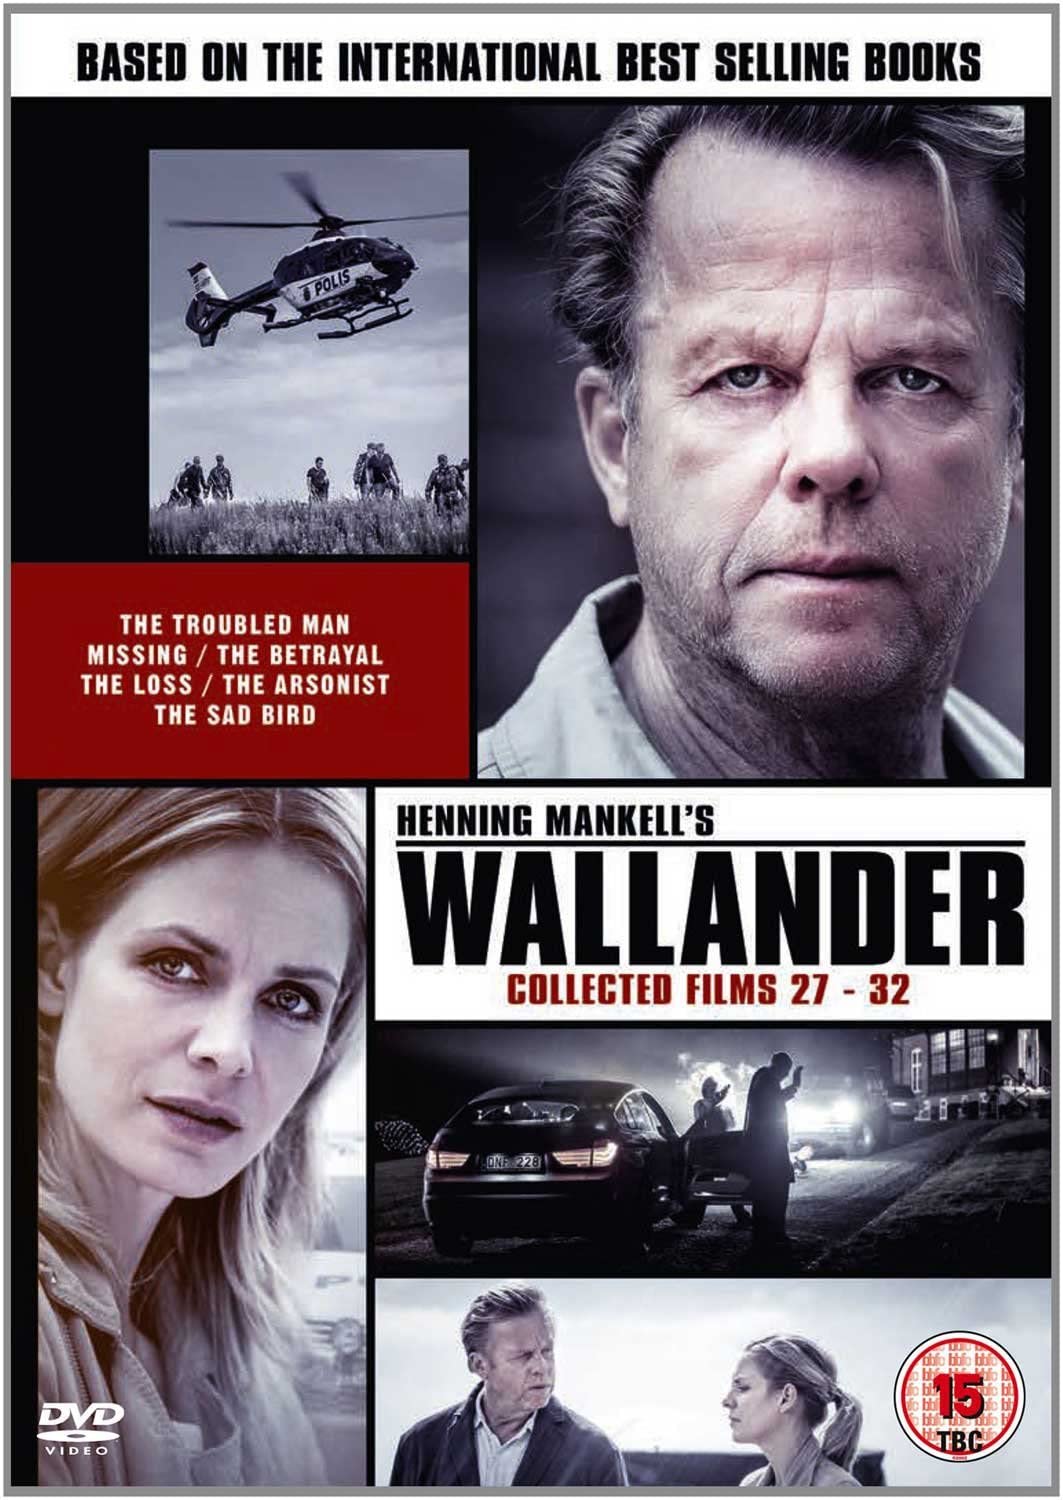 Wallander Collected Films 27-32 (The Final Season) - Drama [DVD]